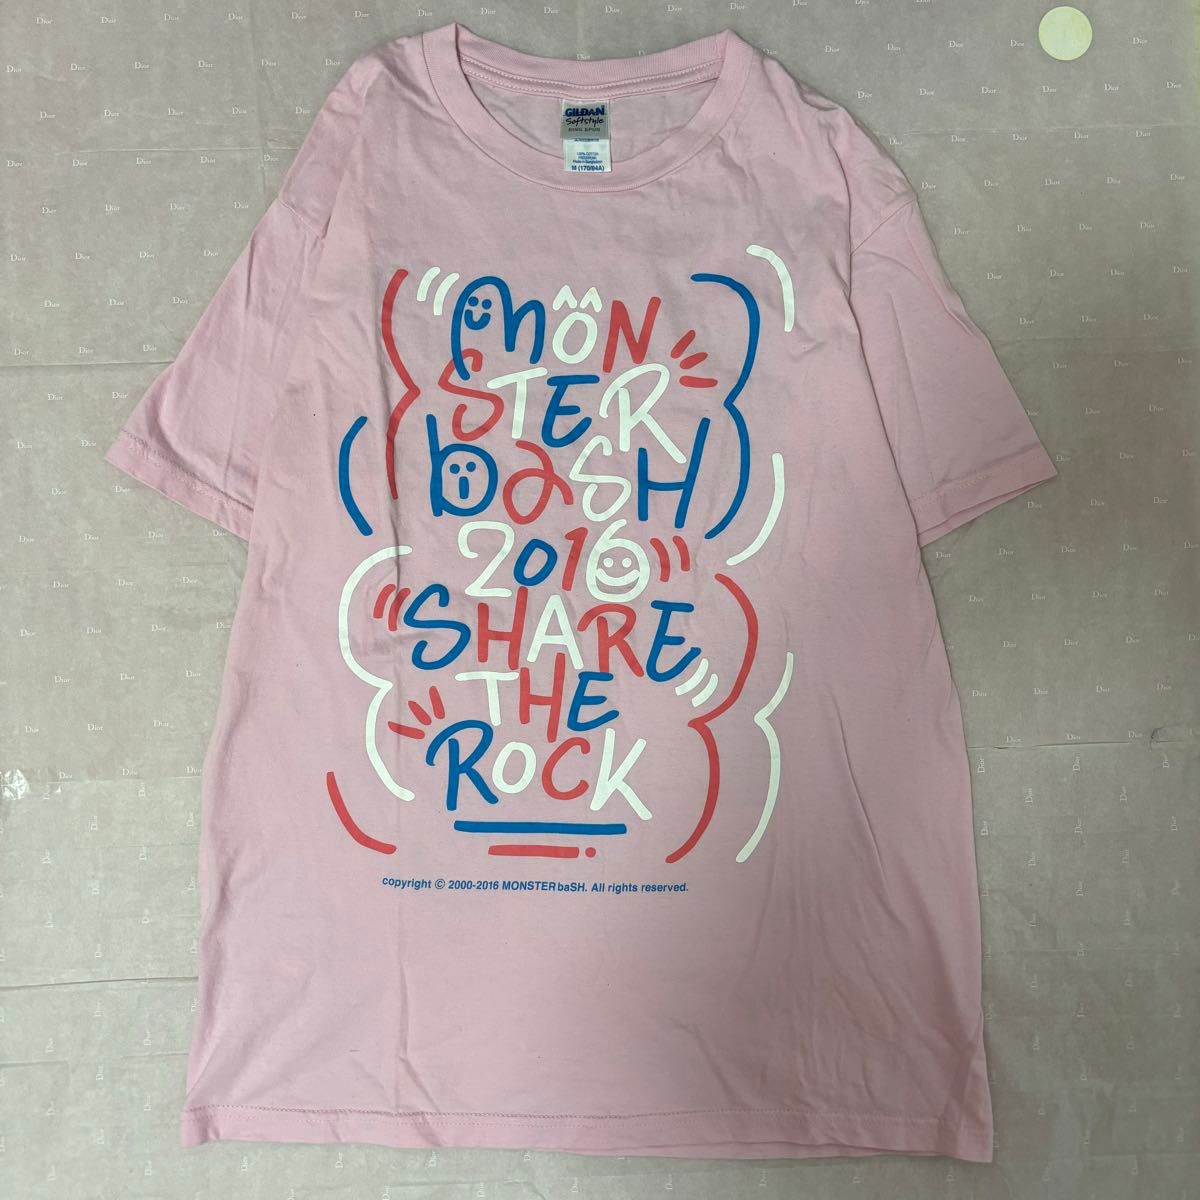 00's vintage Tシャツ アーカイブ グランジ y2k パンク